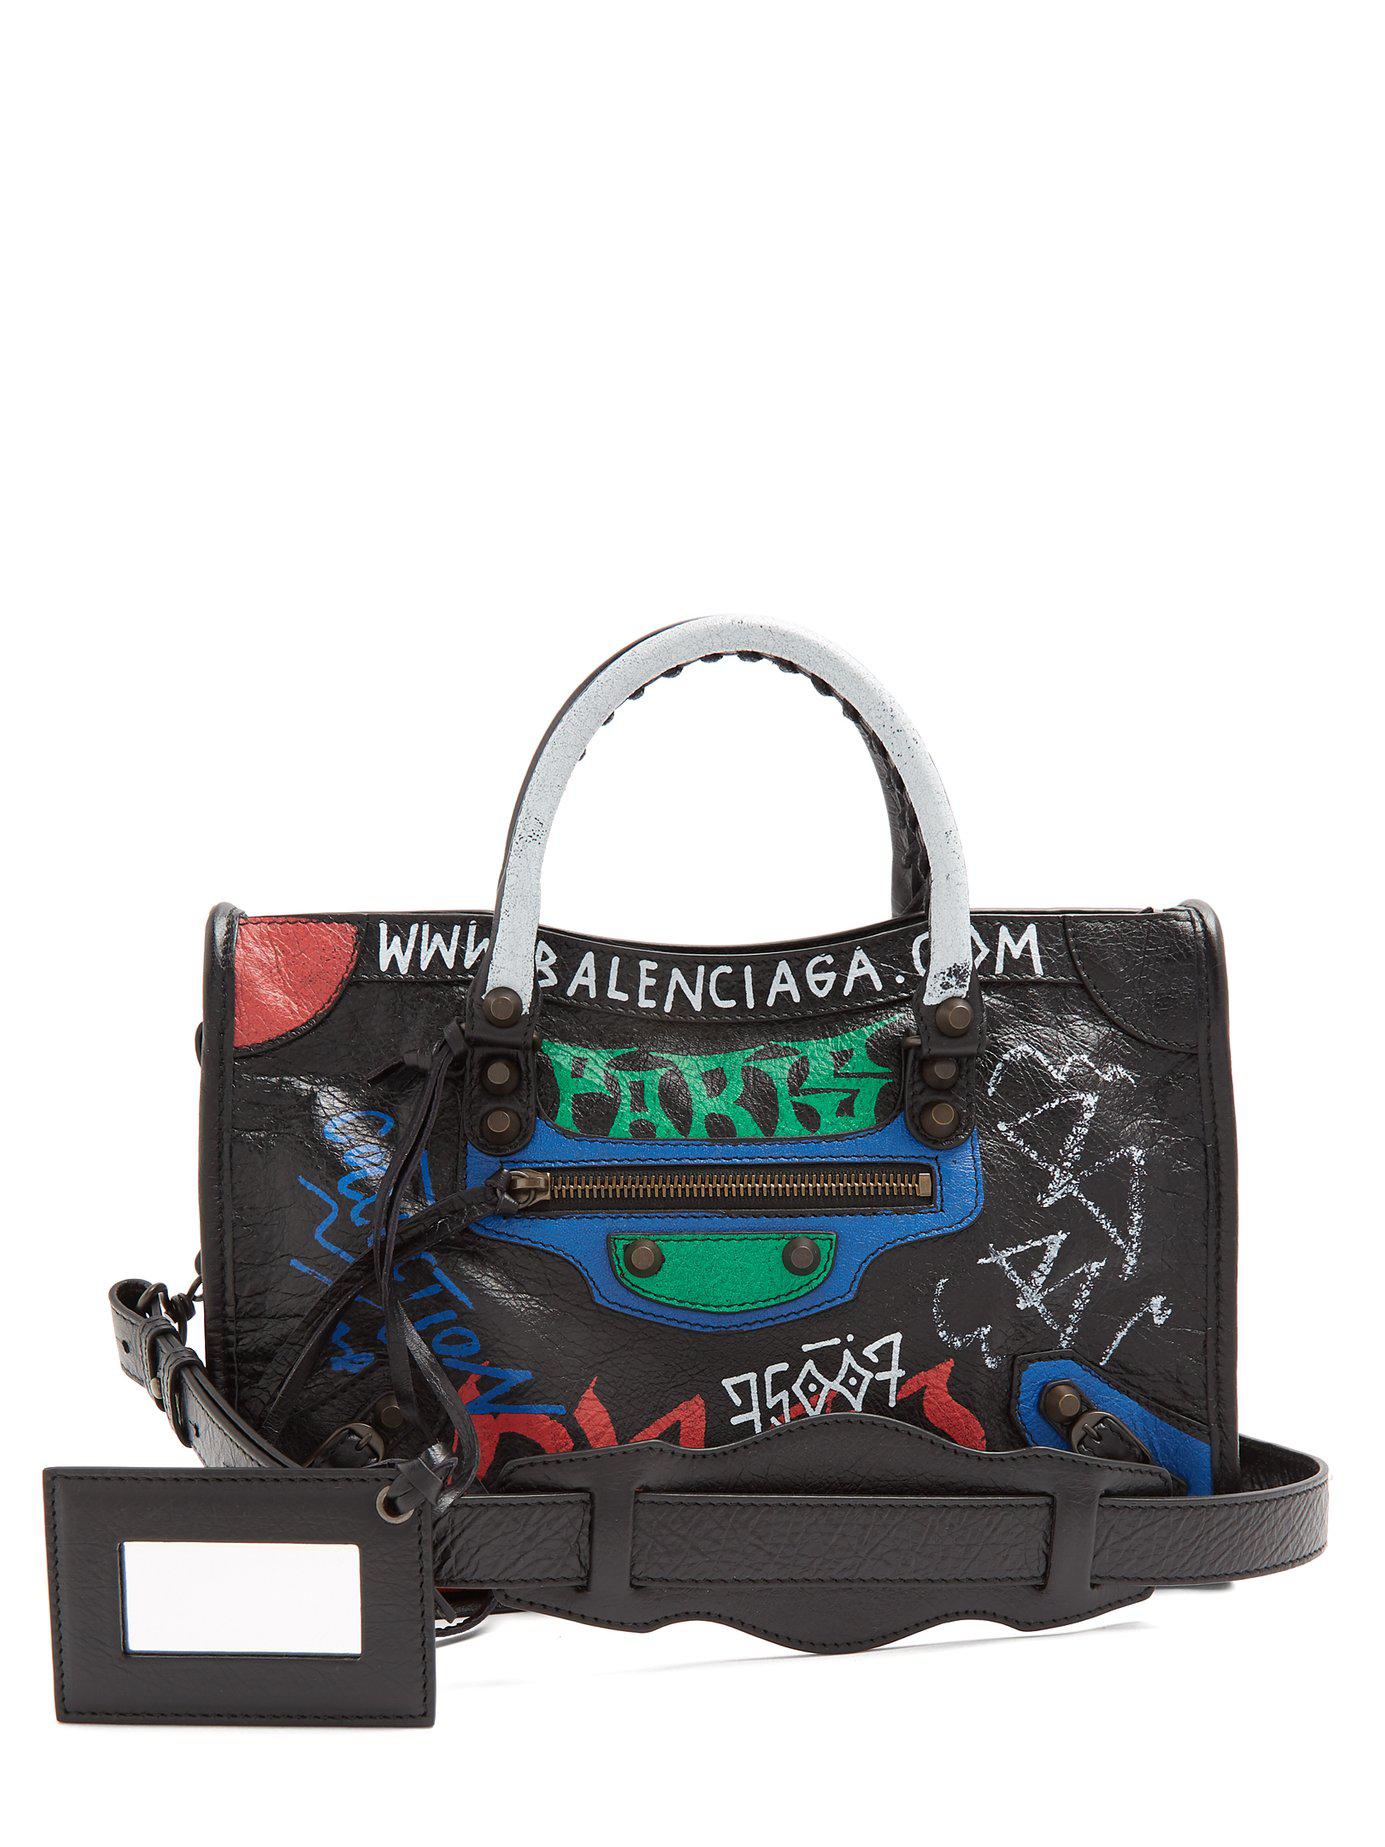 analysere Monet ubehag Balenciaga Leather Classic City S Bag Graffiti in Black Green (Black) - Lyst